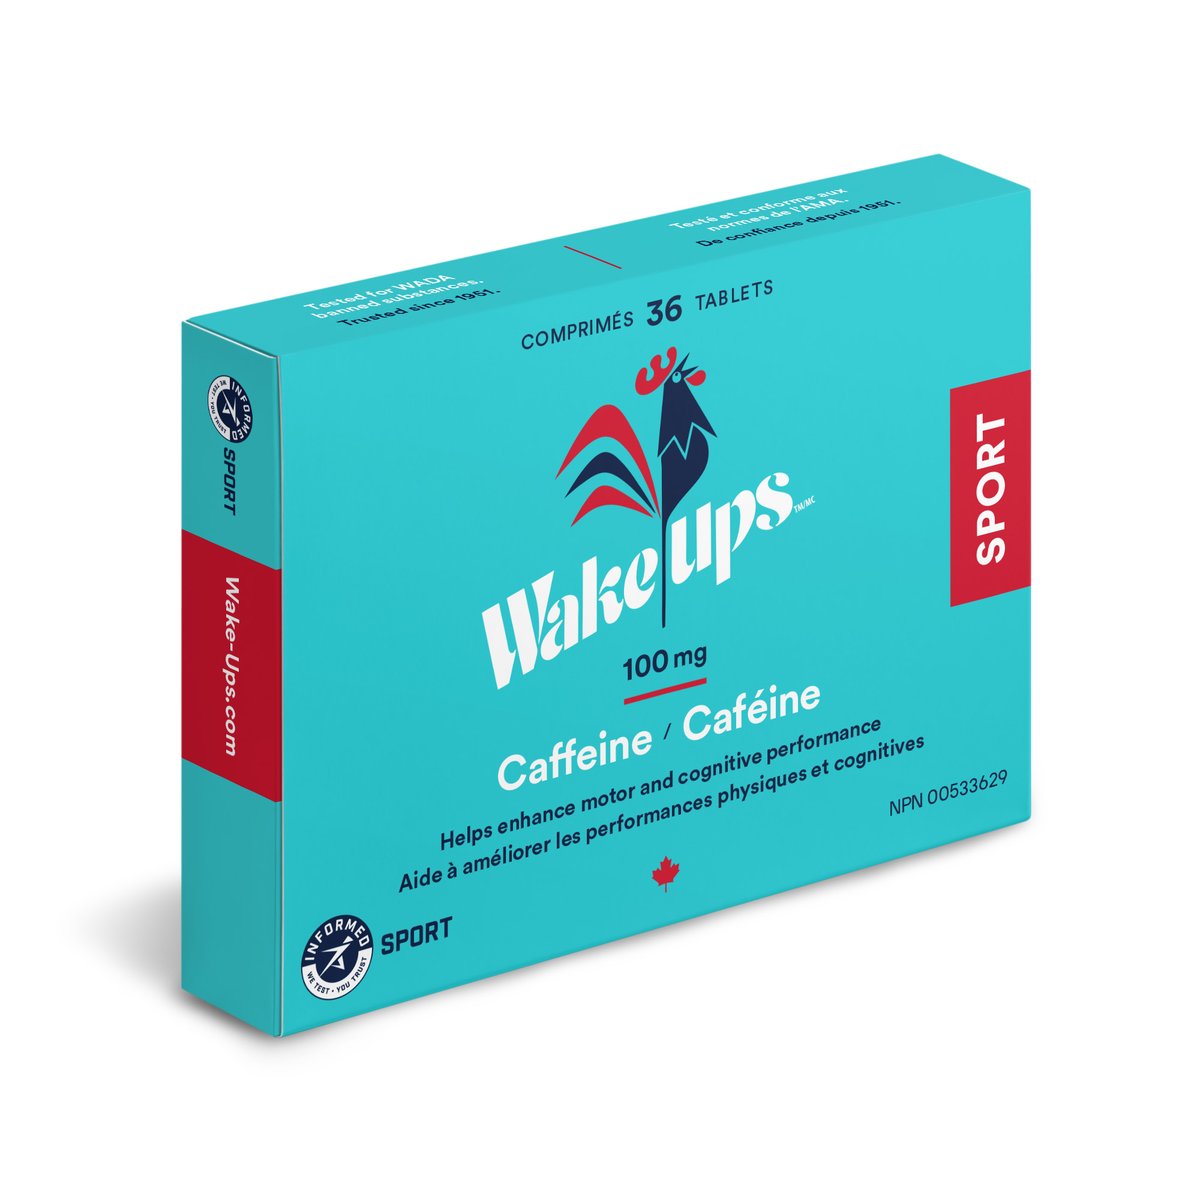 Wakeups Certified Caffeine Tabs 100mg